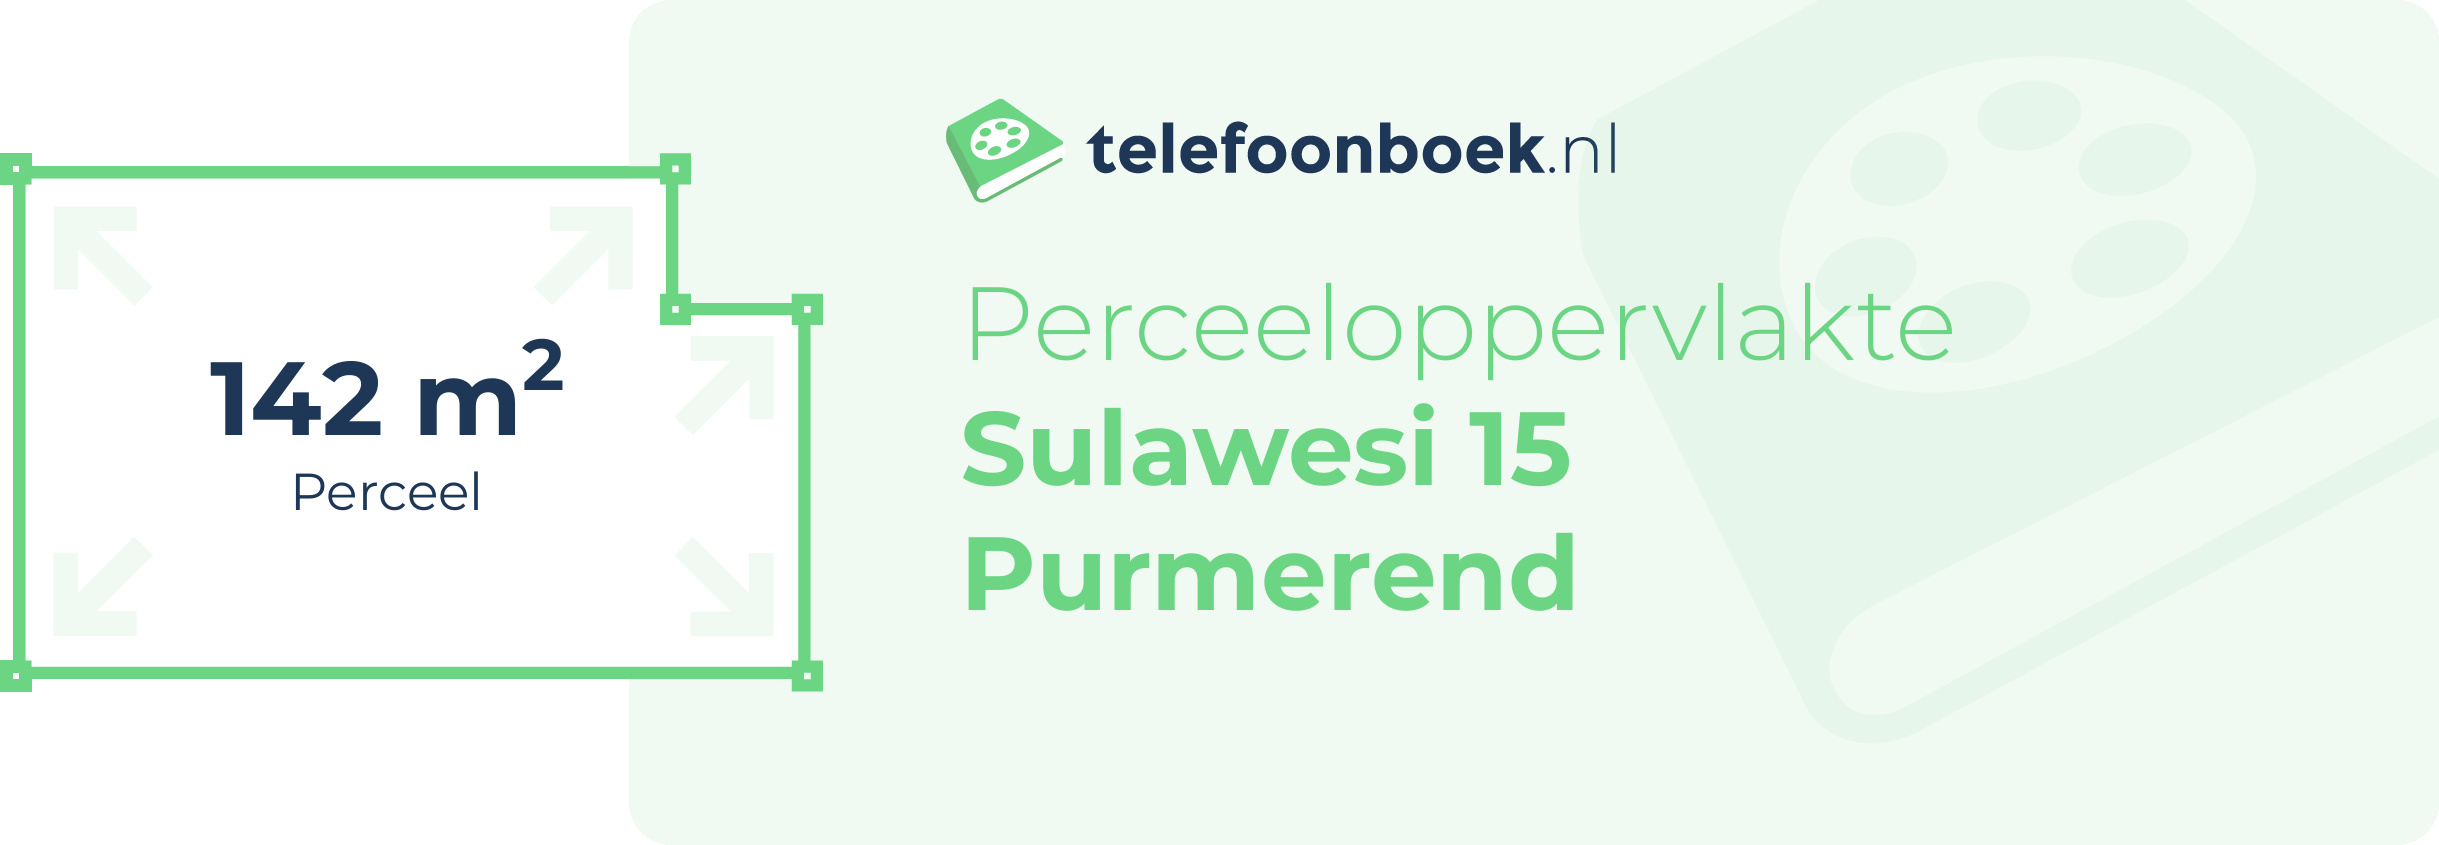 Perceeloppervlakte Sulawesi 15 Purmerend